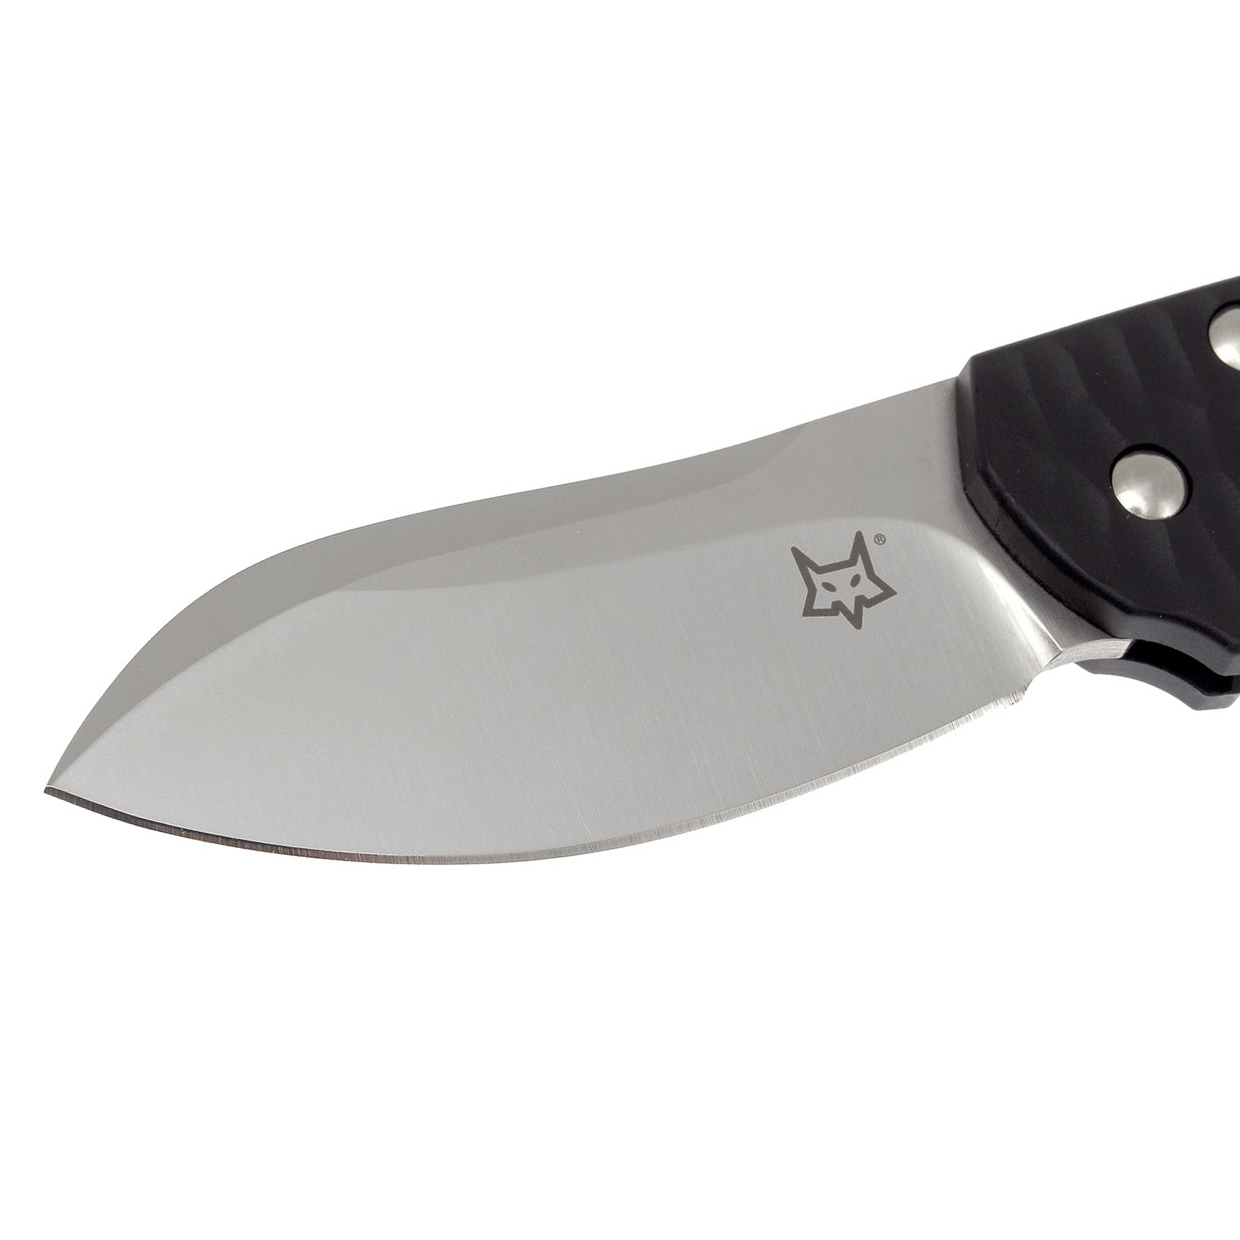 фото Складной нож fox jens anso design, сталь n690, рукоять термопластик frn, черный